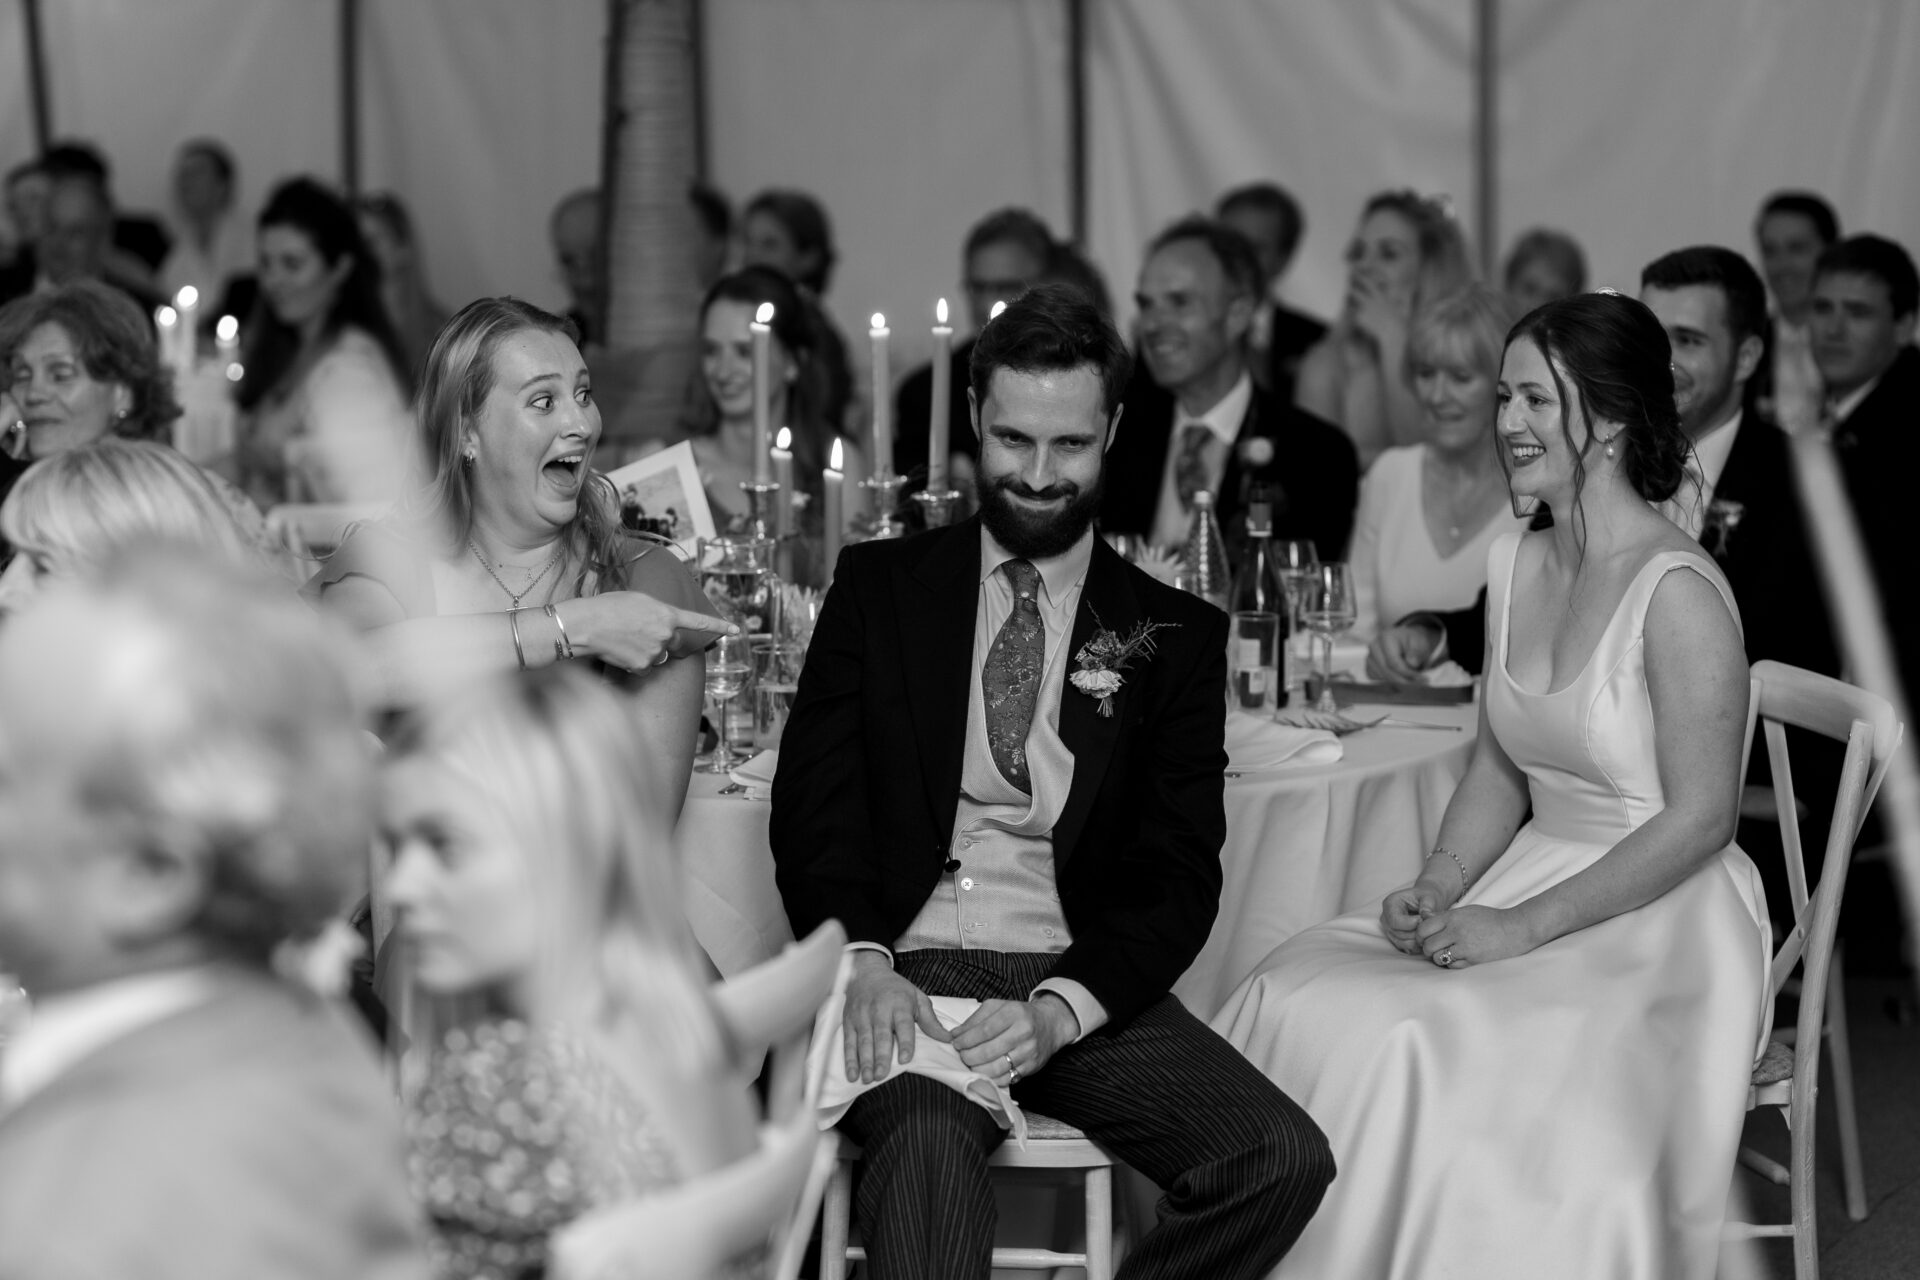 The groom enjoys a wedding speech